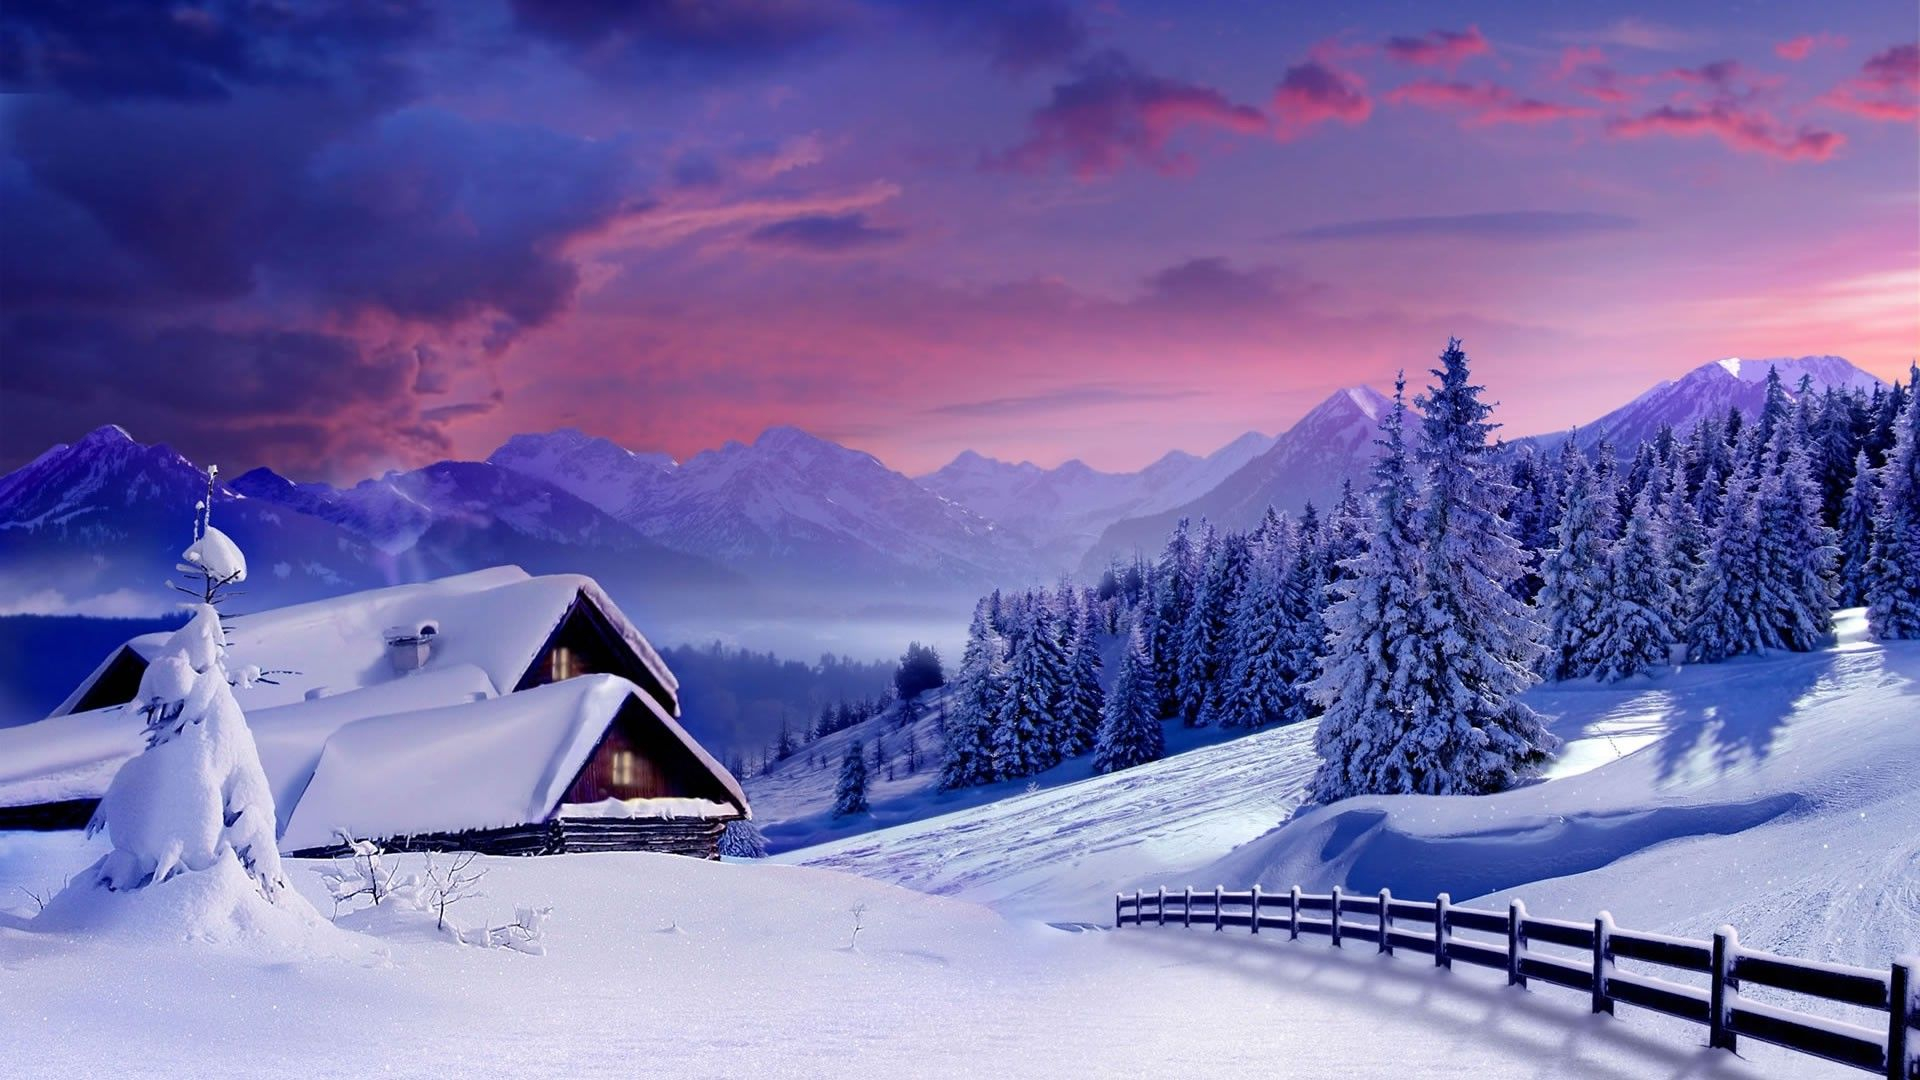 1920x1080 Scenic Winter Landscape Winter Nature Background Wallpapers on | Hintergrundbilder winter, Winter szenen, Landschafts tapete